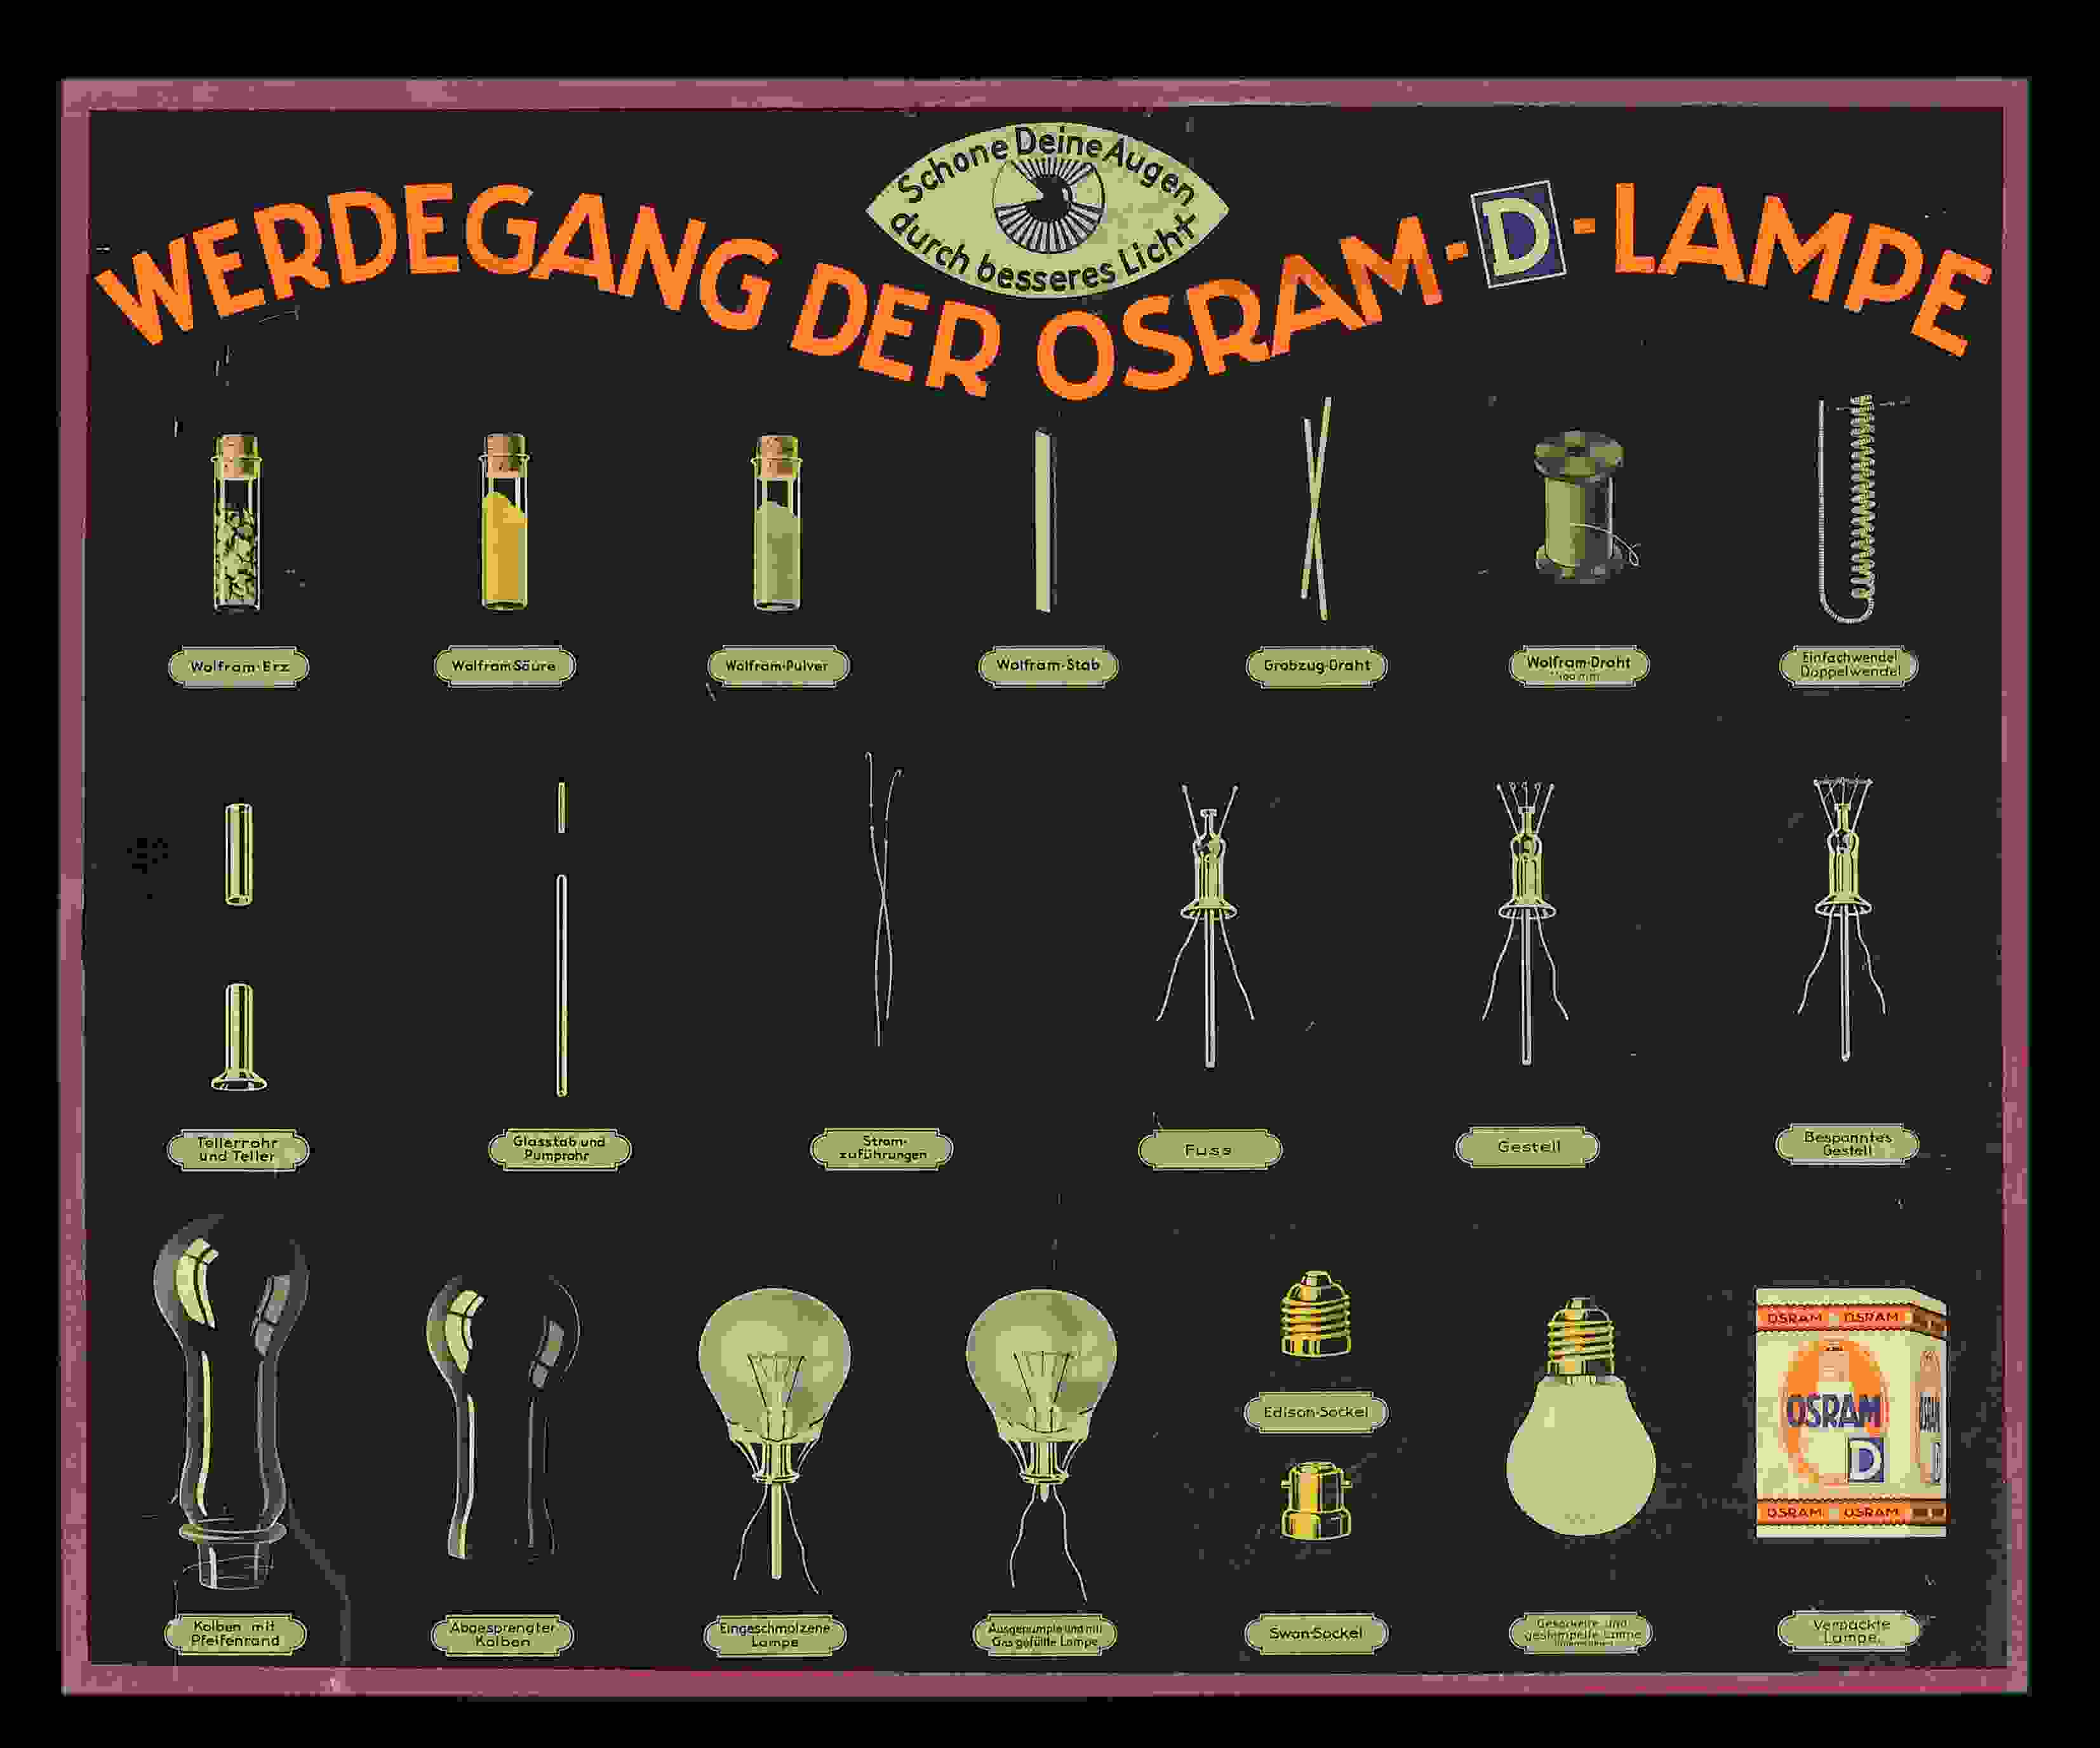 Osram D-Lampe Werdegang 